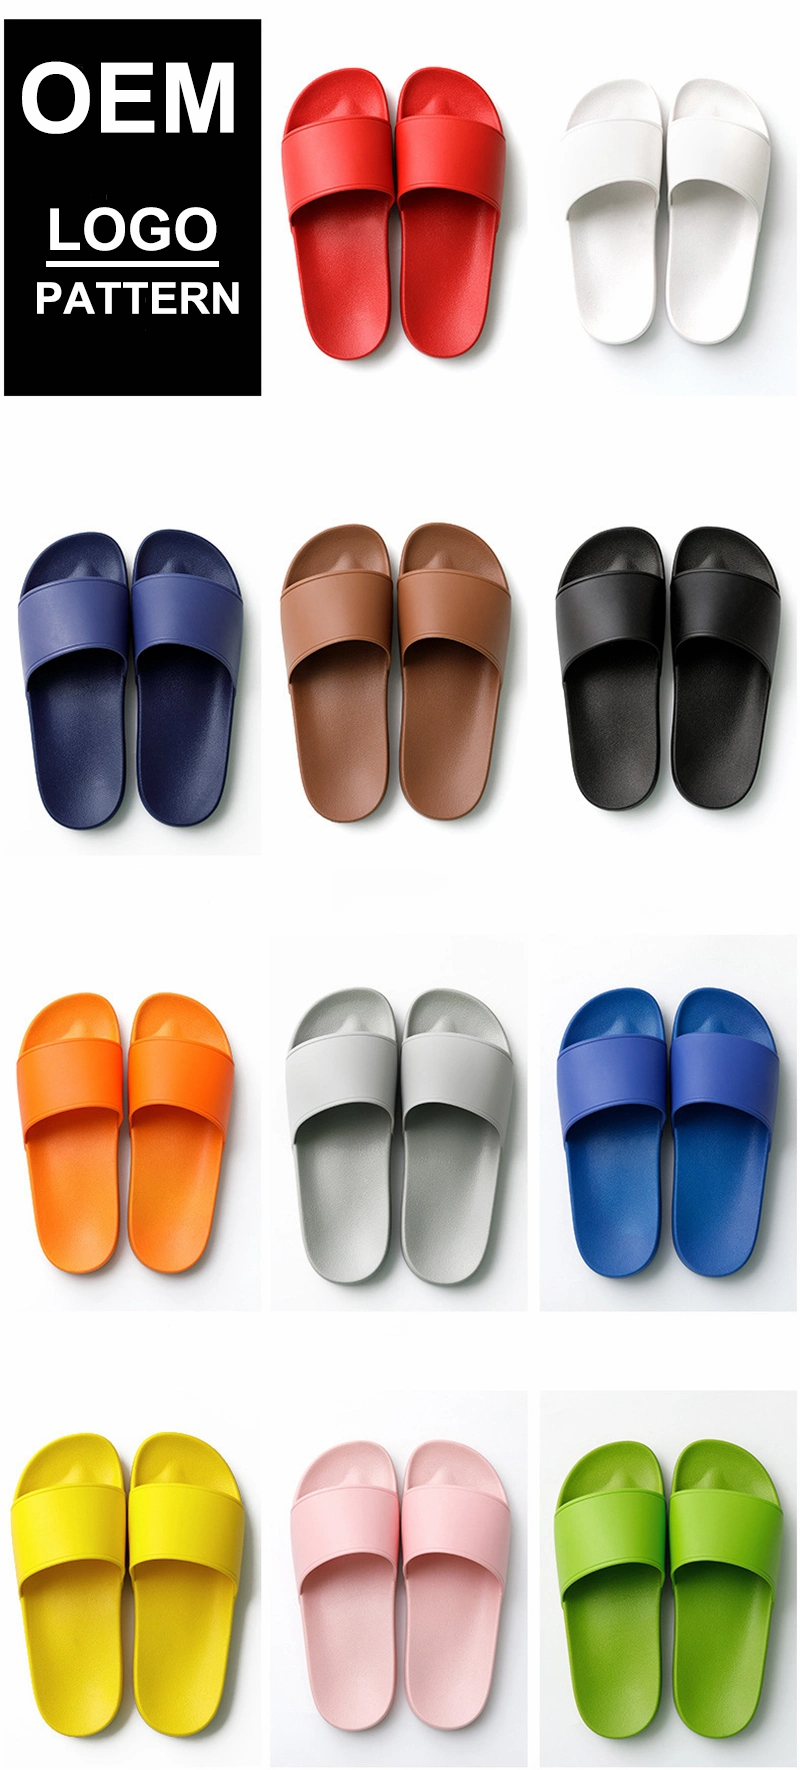 Woven Diamond Comfortable Slippers Durable Non-Slip Beach Women Sandals